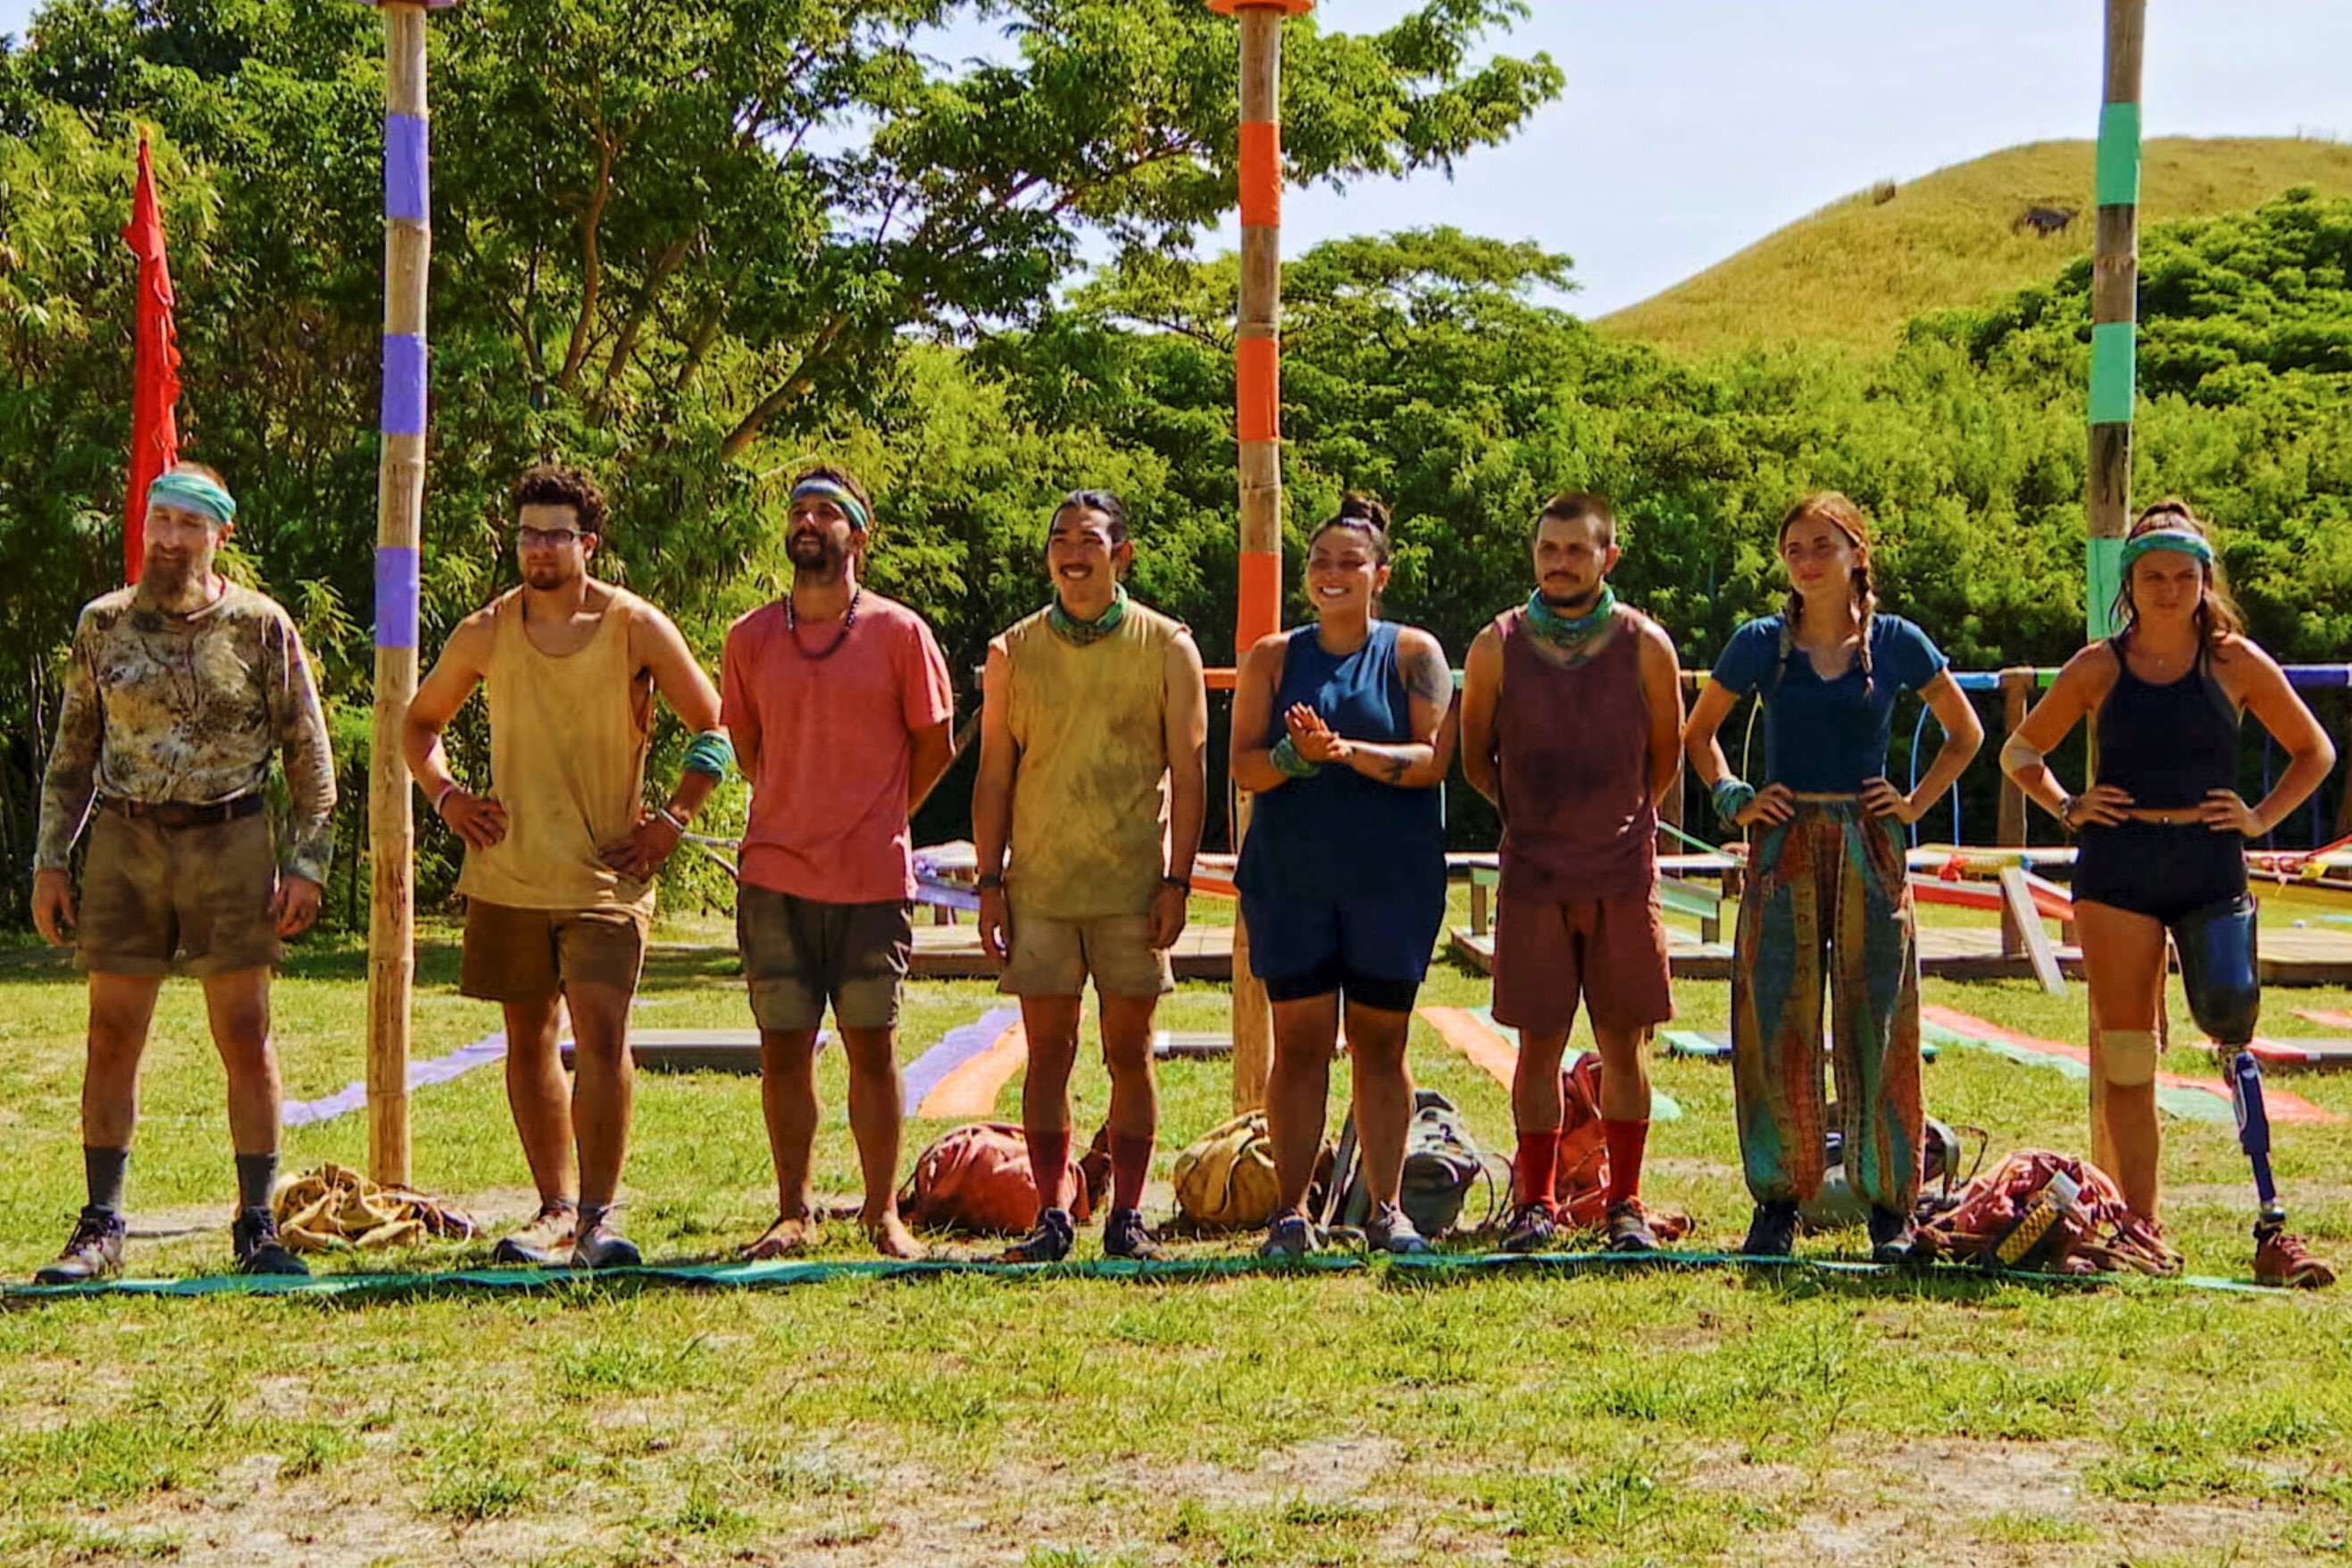 The final eight castaways in 'Survivor' Season 43 compete in the Immunity Challenge.